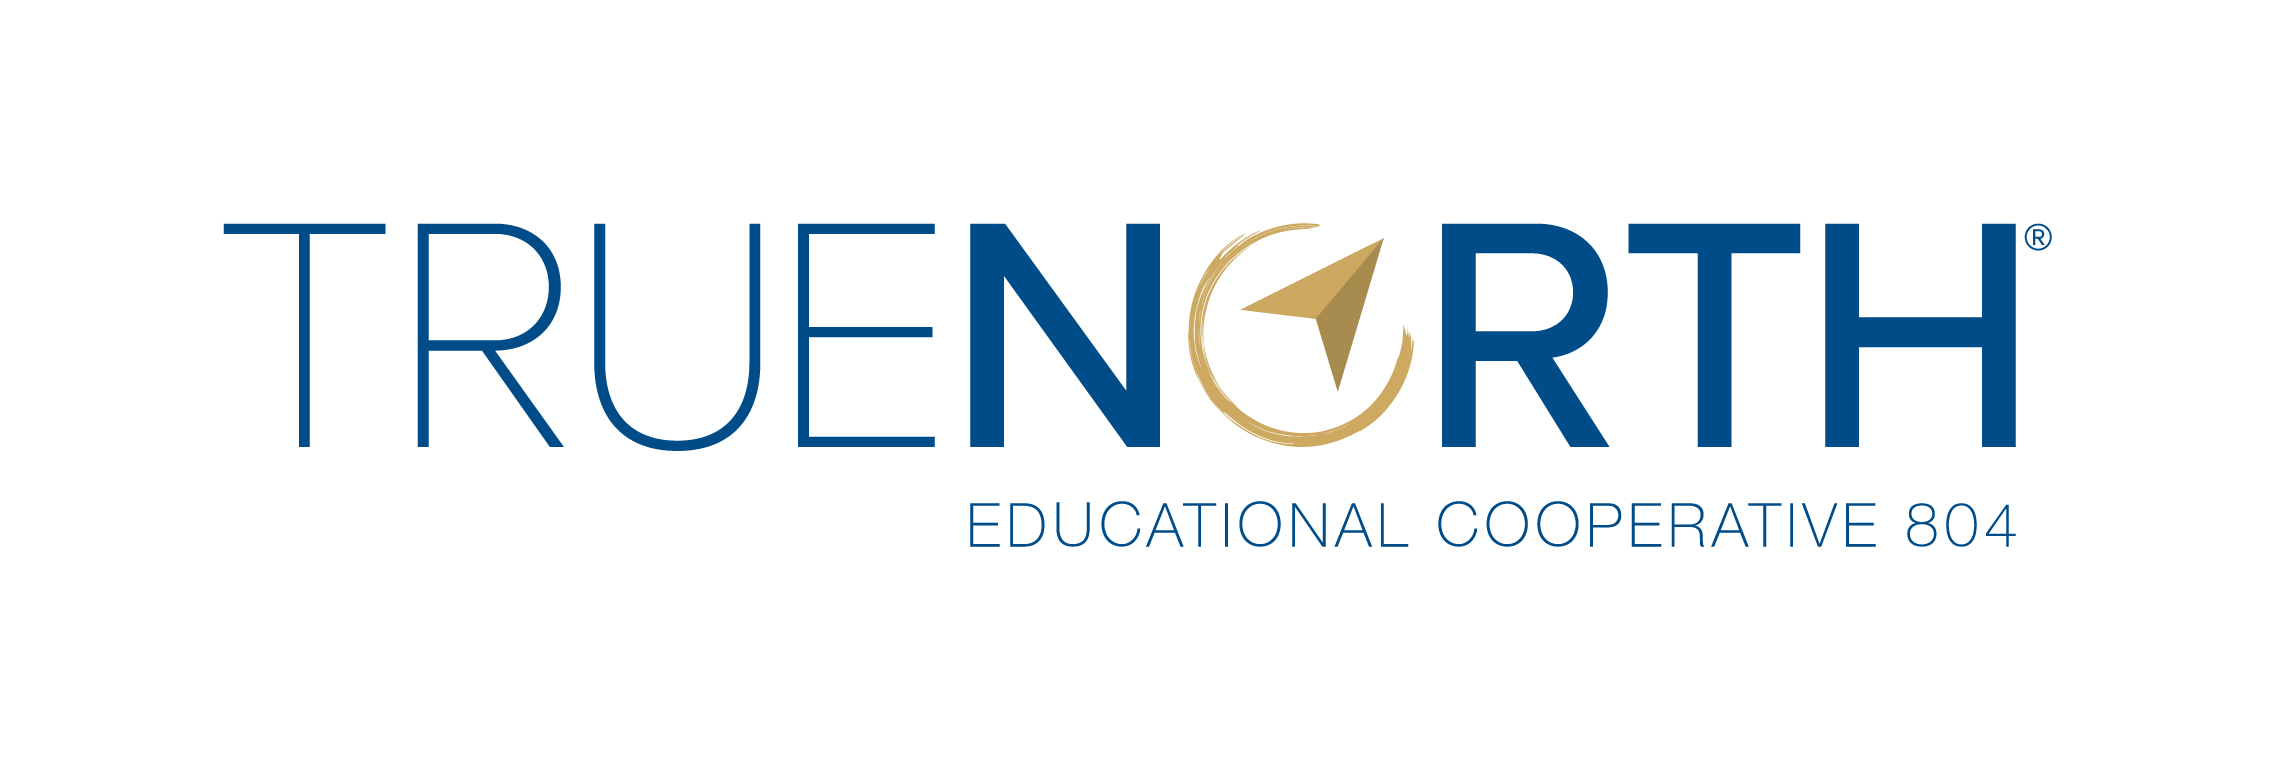 TrueNorth Educational Cooperative 804's Logo